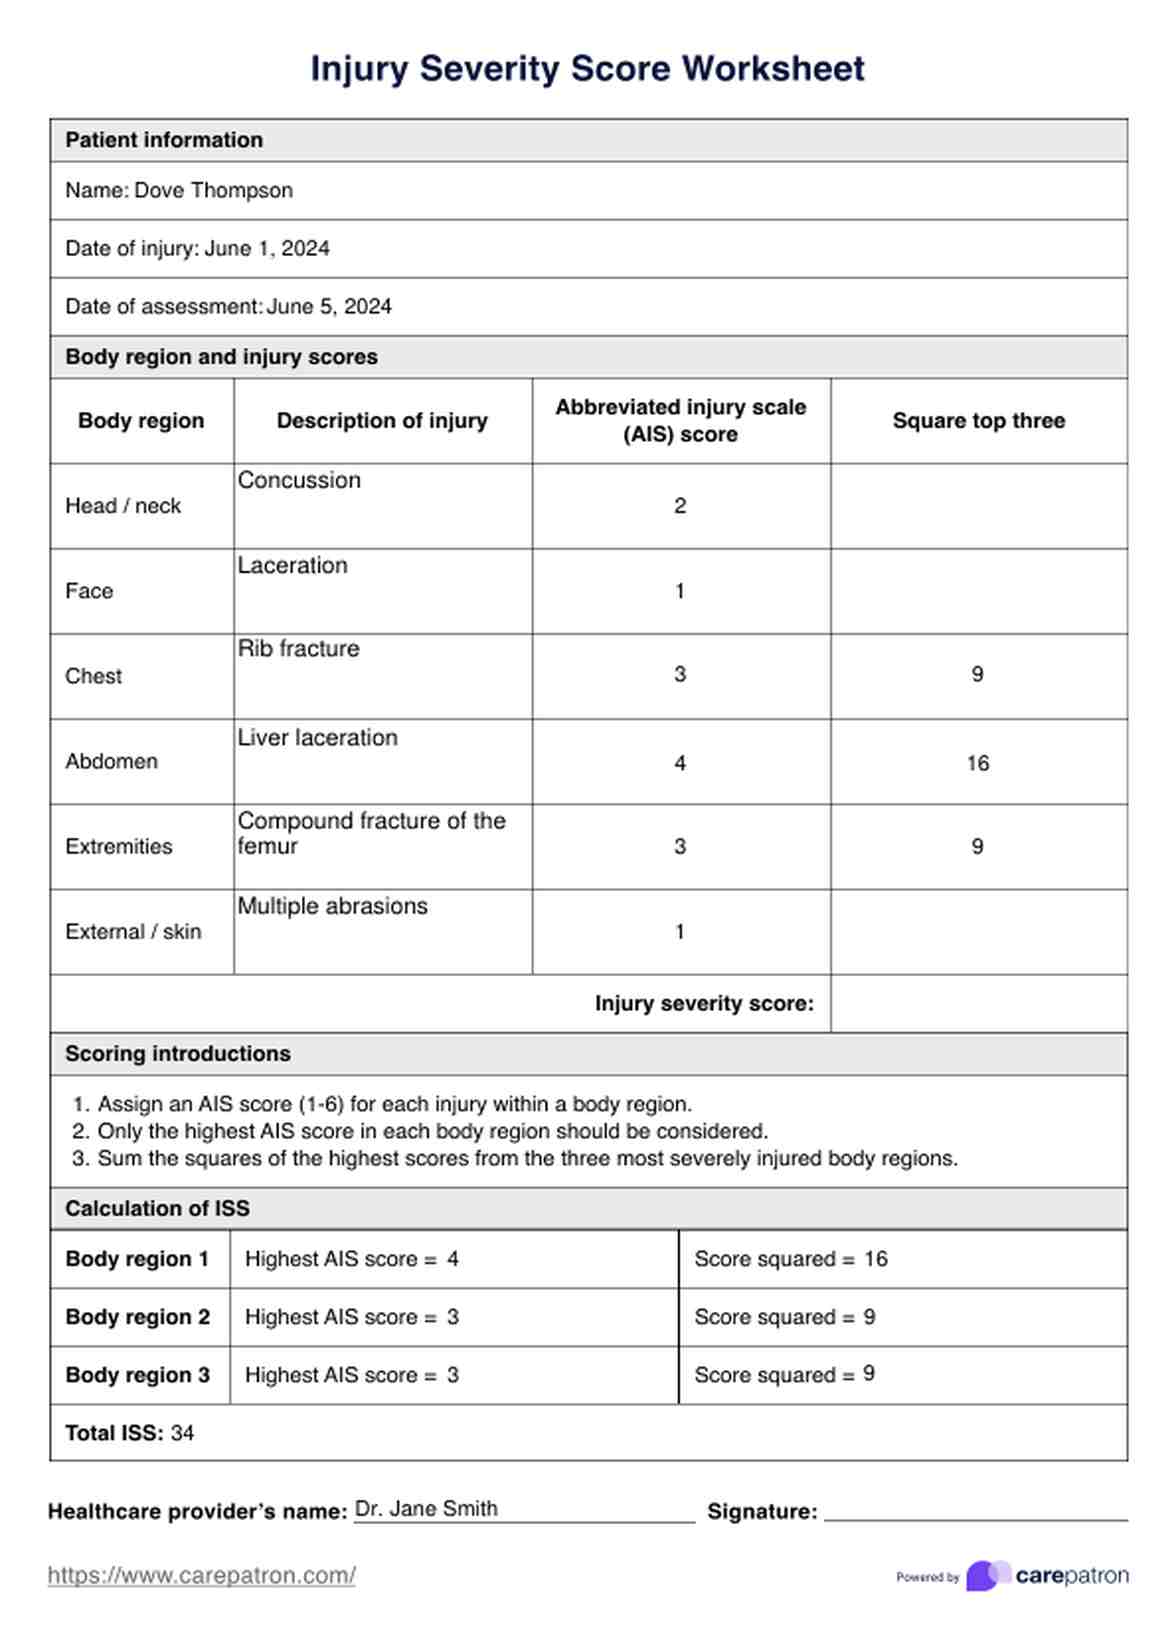 Injury Severity Score Worksheet PDF Example